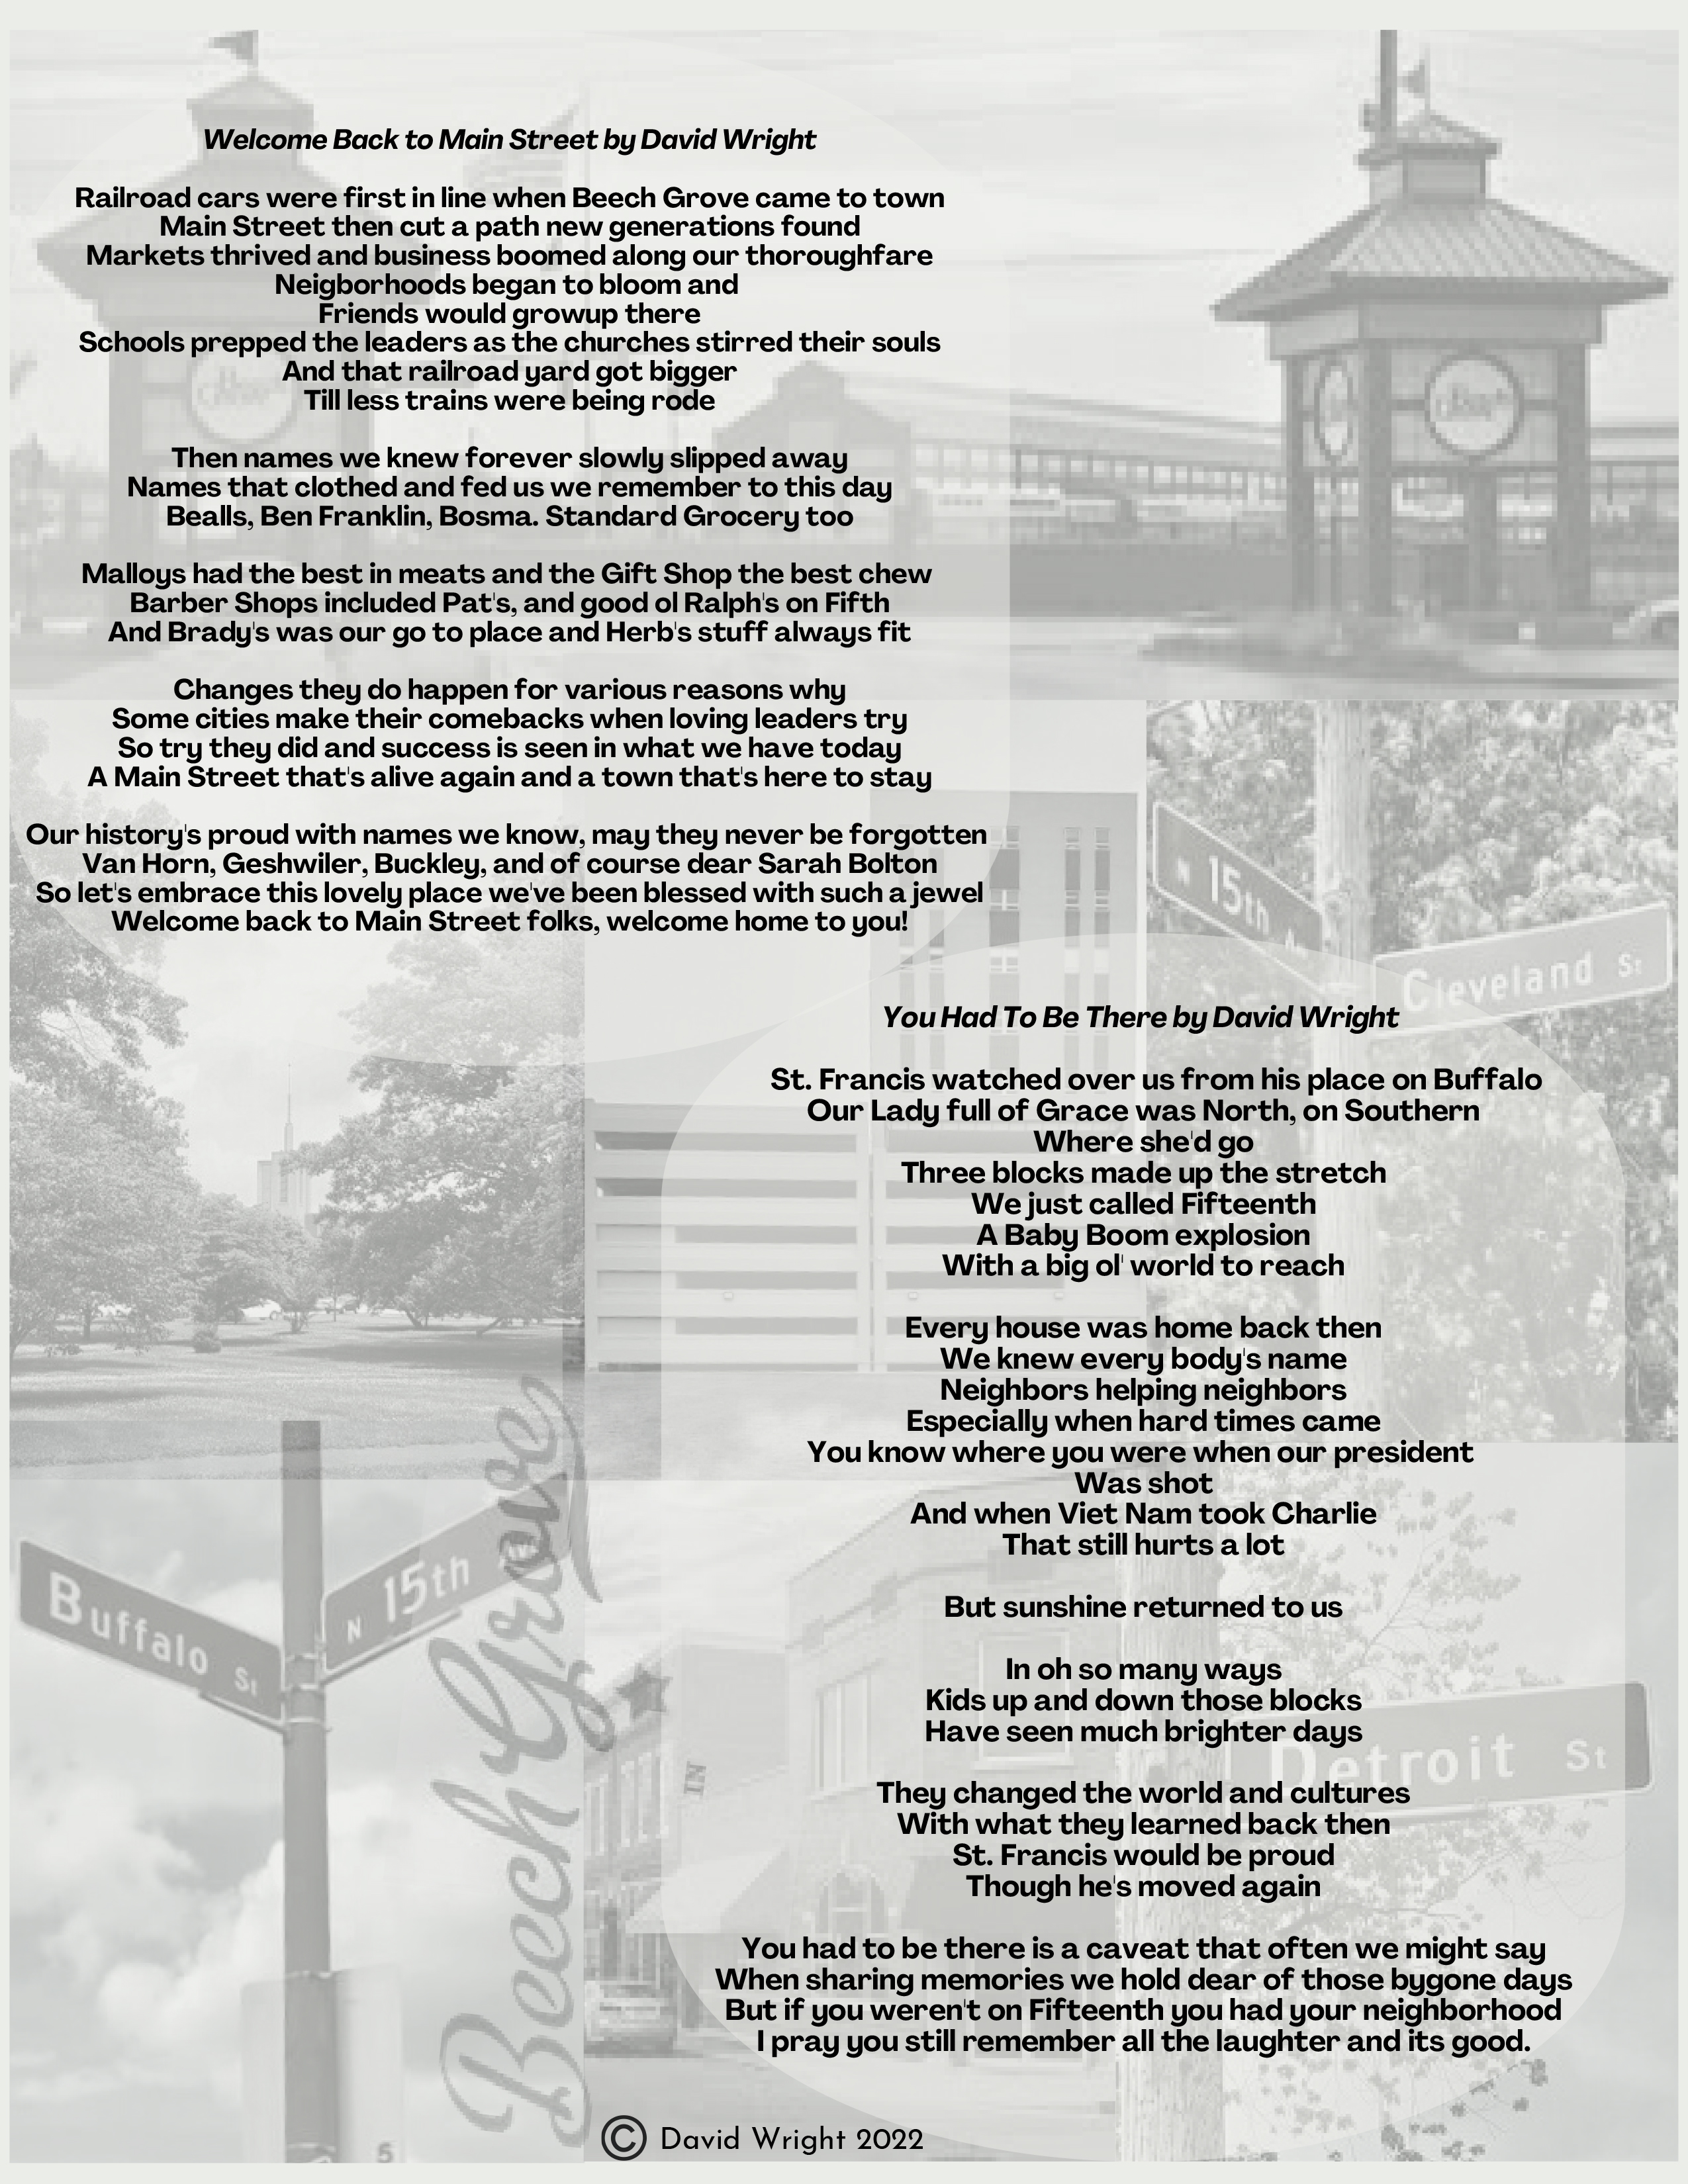 Poems written by our alumni association president